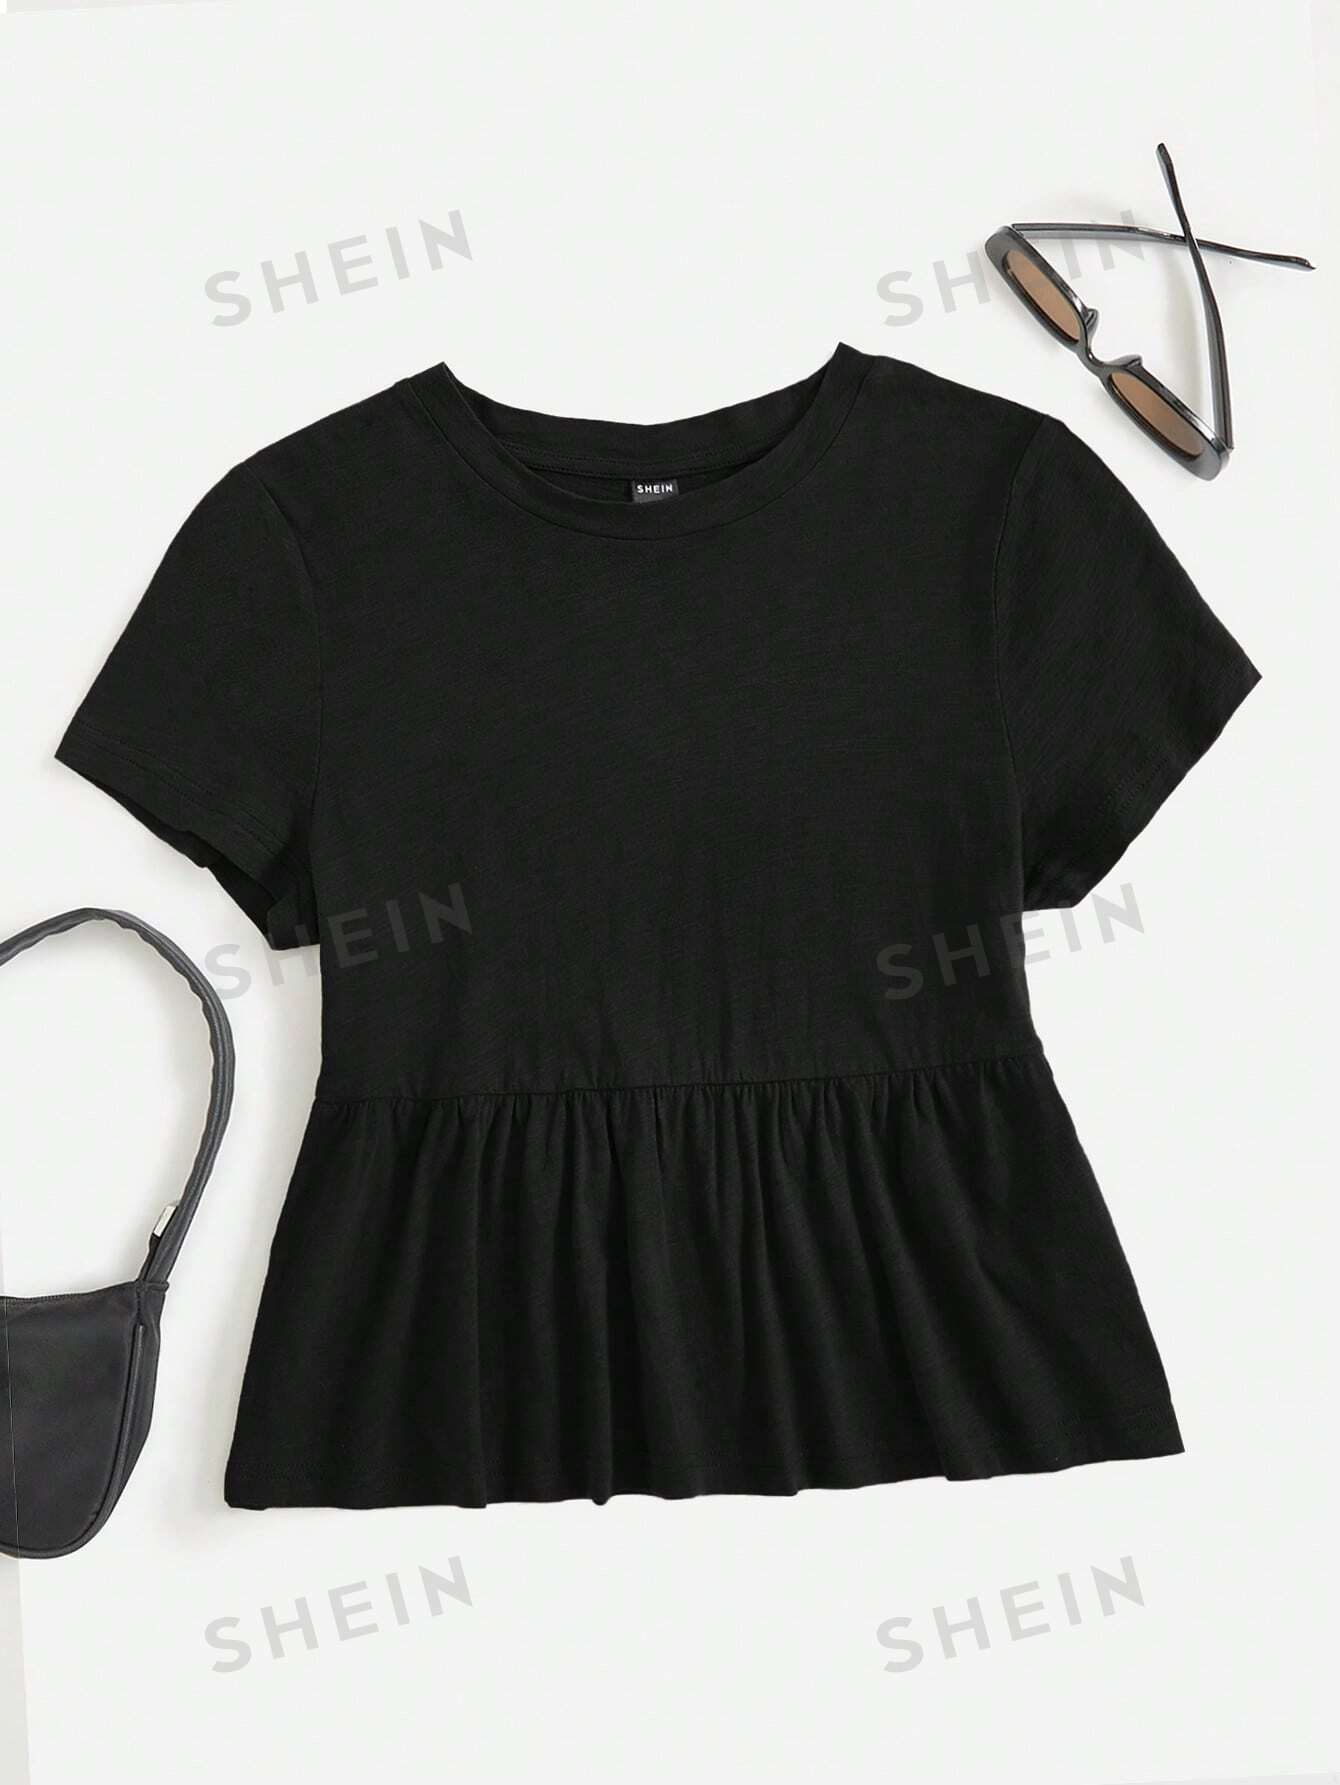 SHEIN EZwear Розовая женская трикотажная футболка, черный